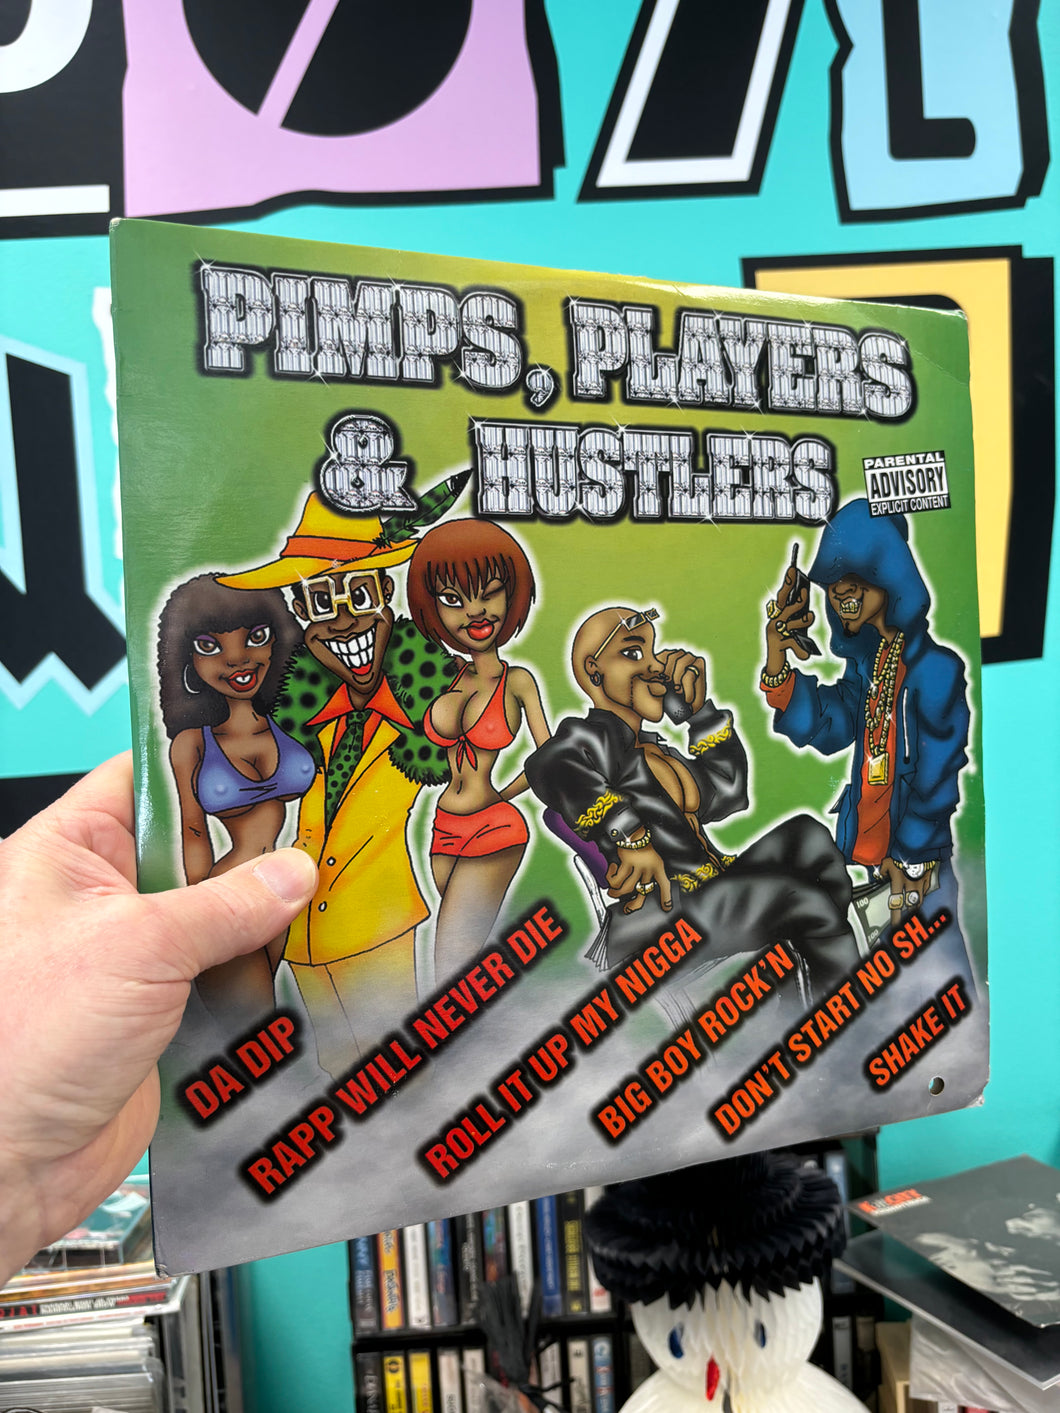 Pimps, Players & Hustlers, 2LP, Lil’ Joe Records, US 2000